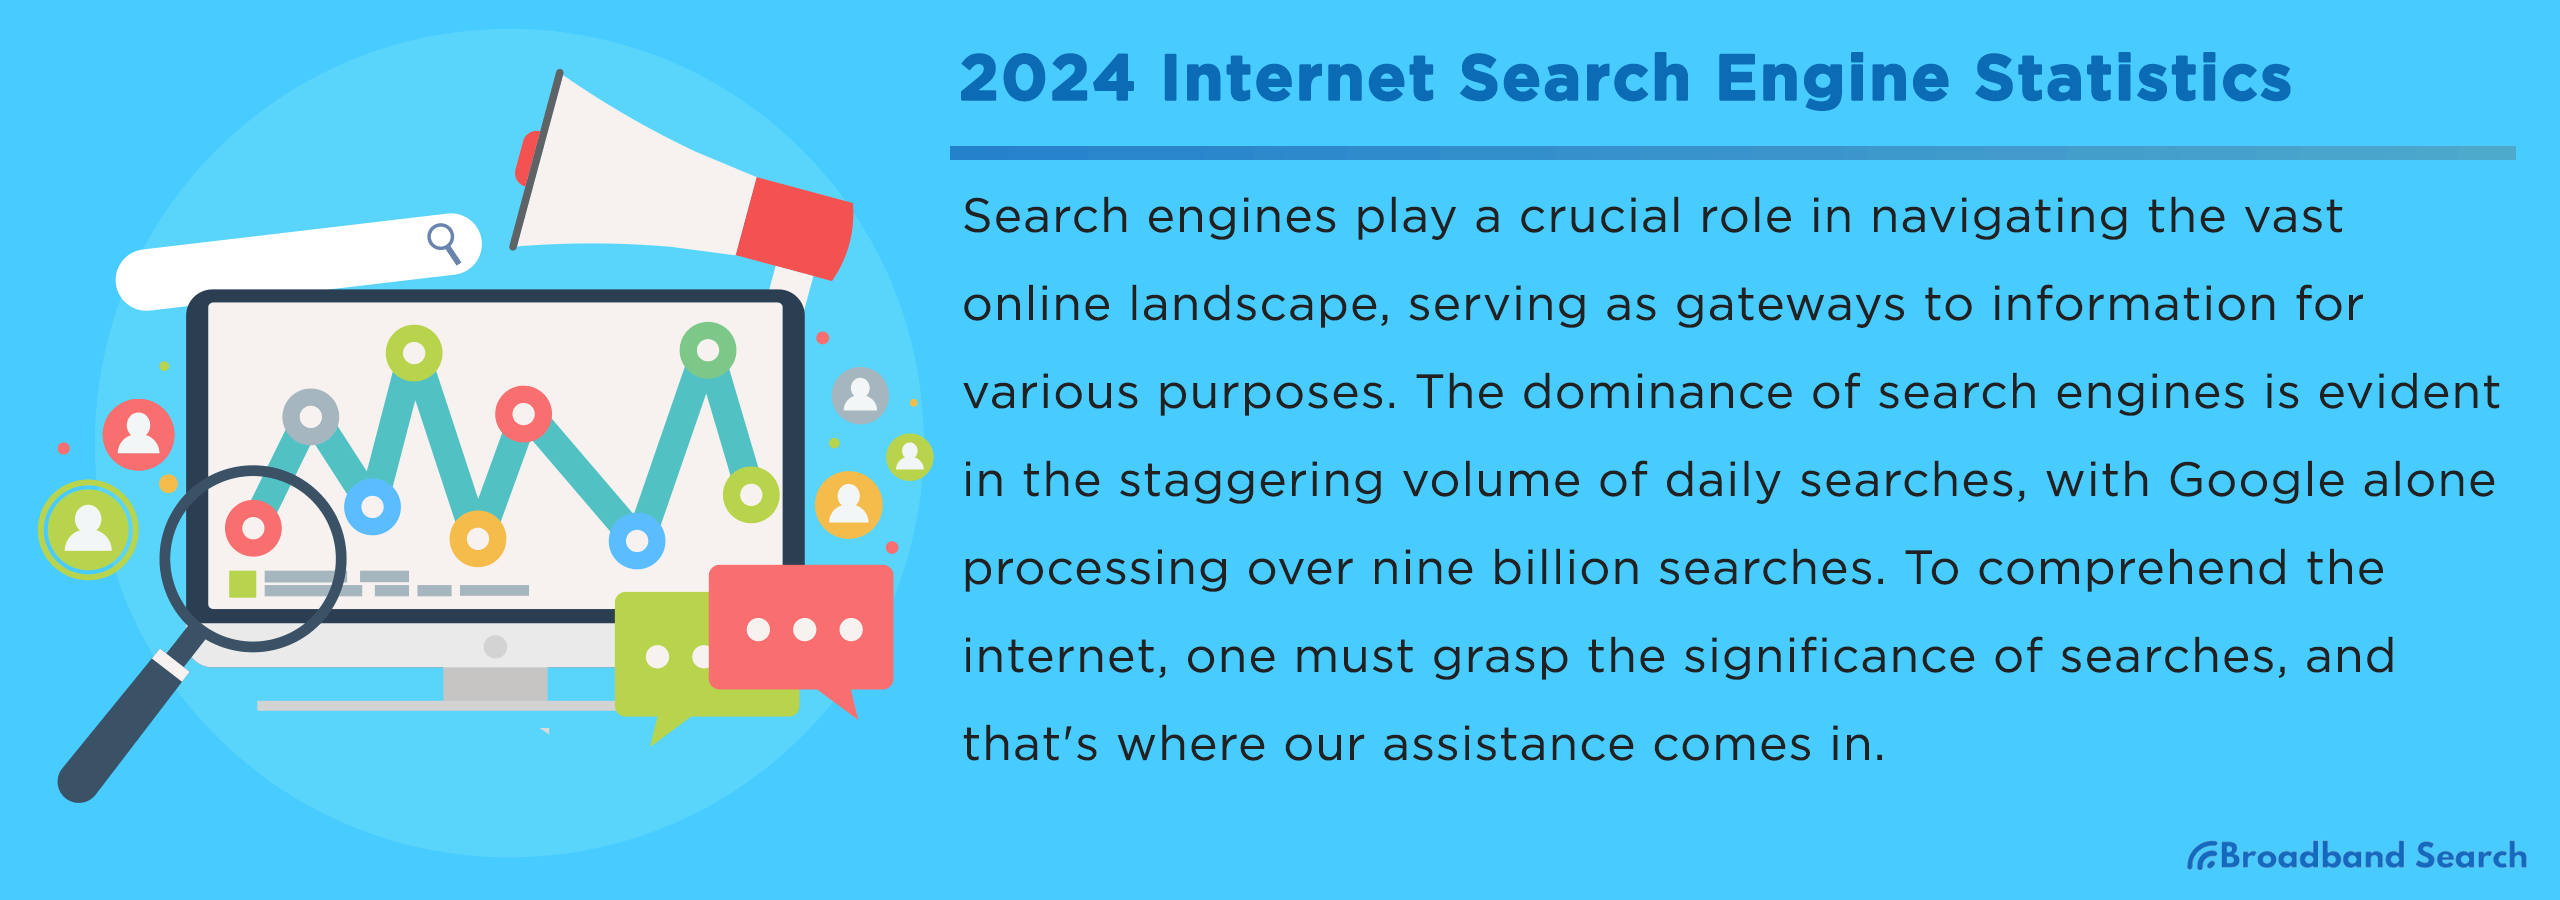 2024 Search Engine Statistics BroadbandSearch